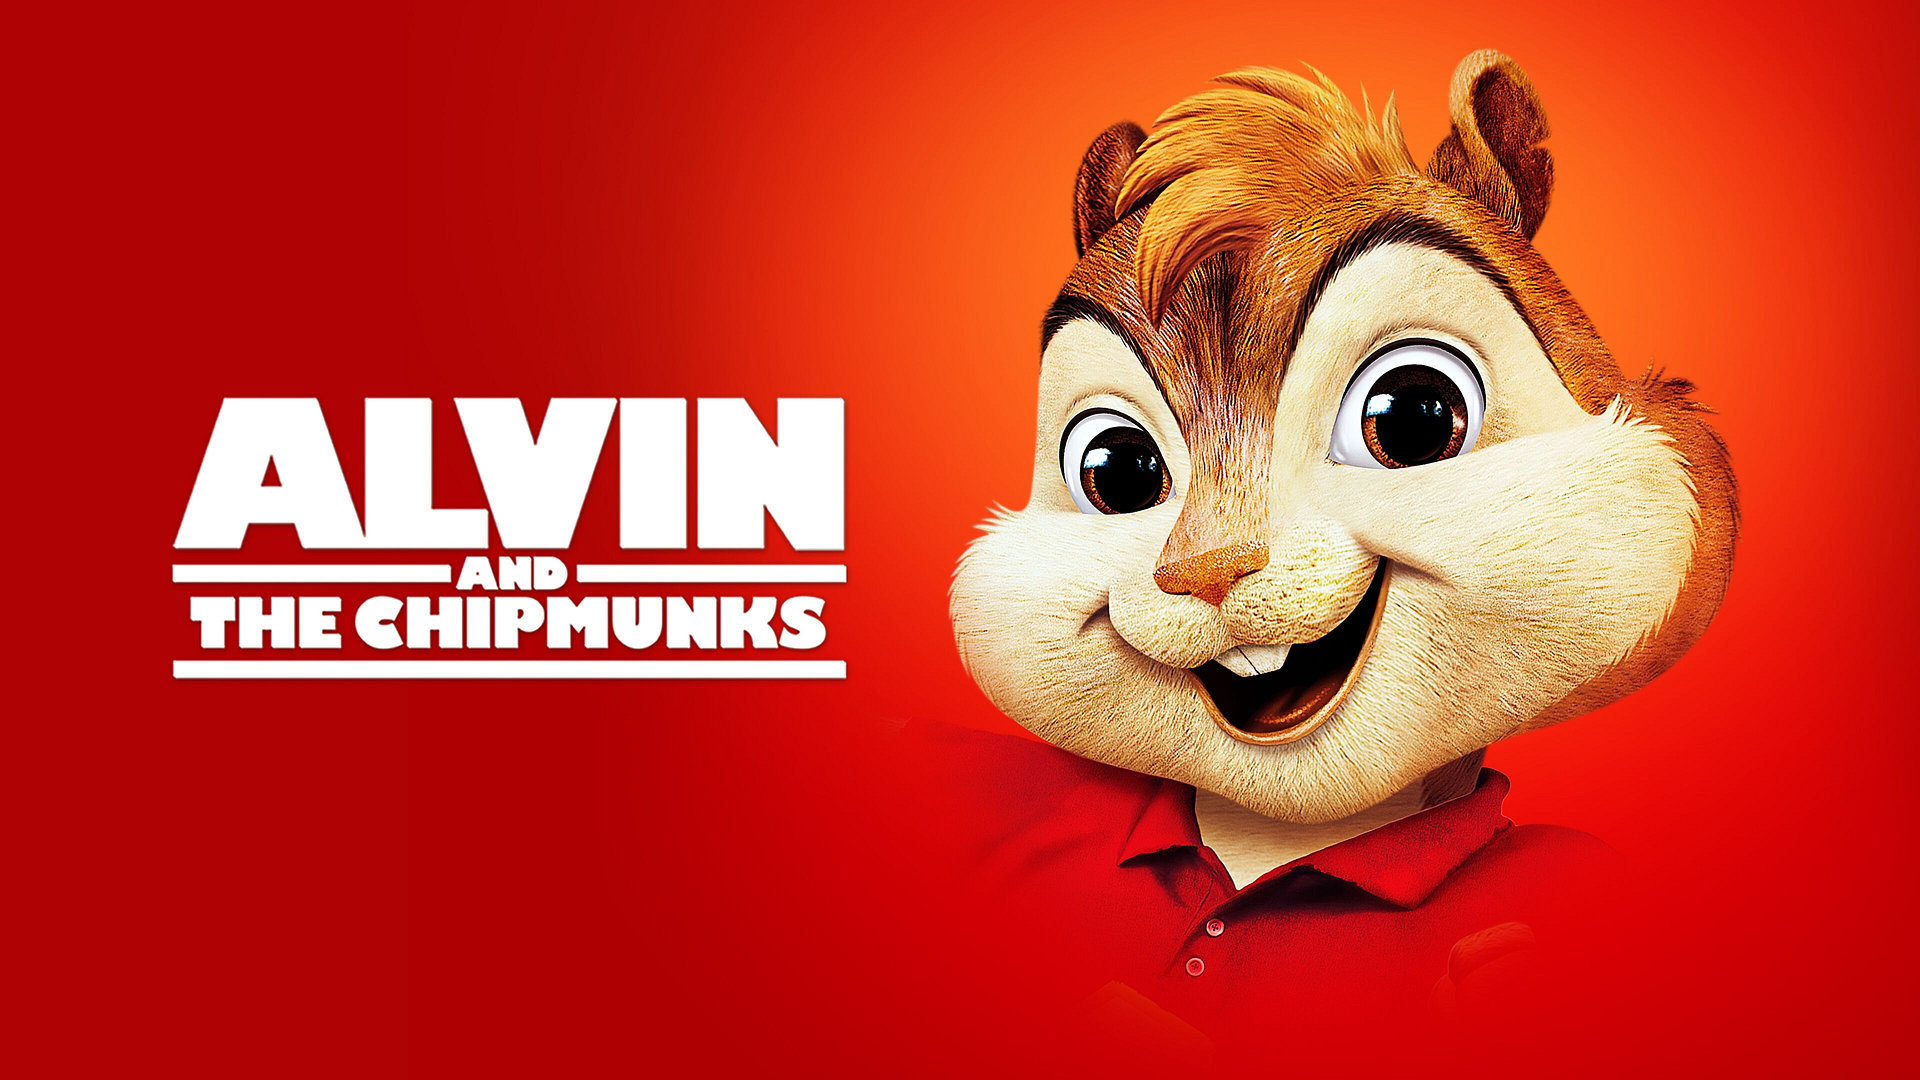 Alvin and the Chipmunks (Original tale)